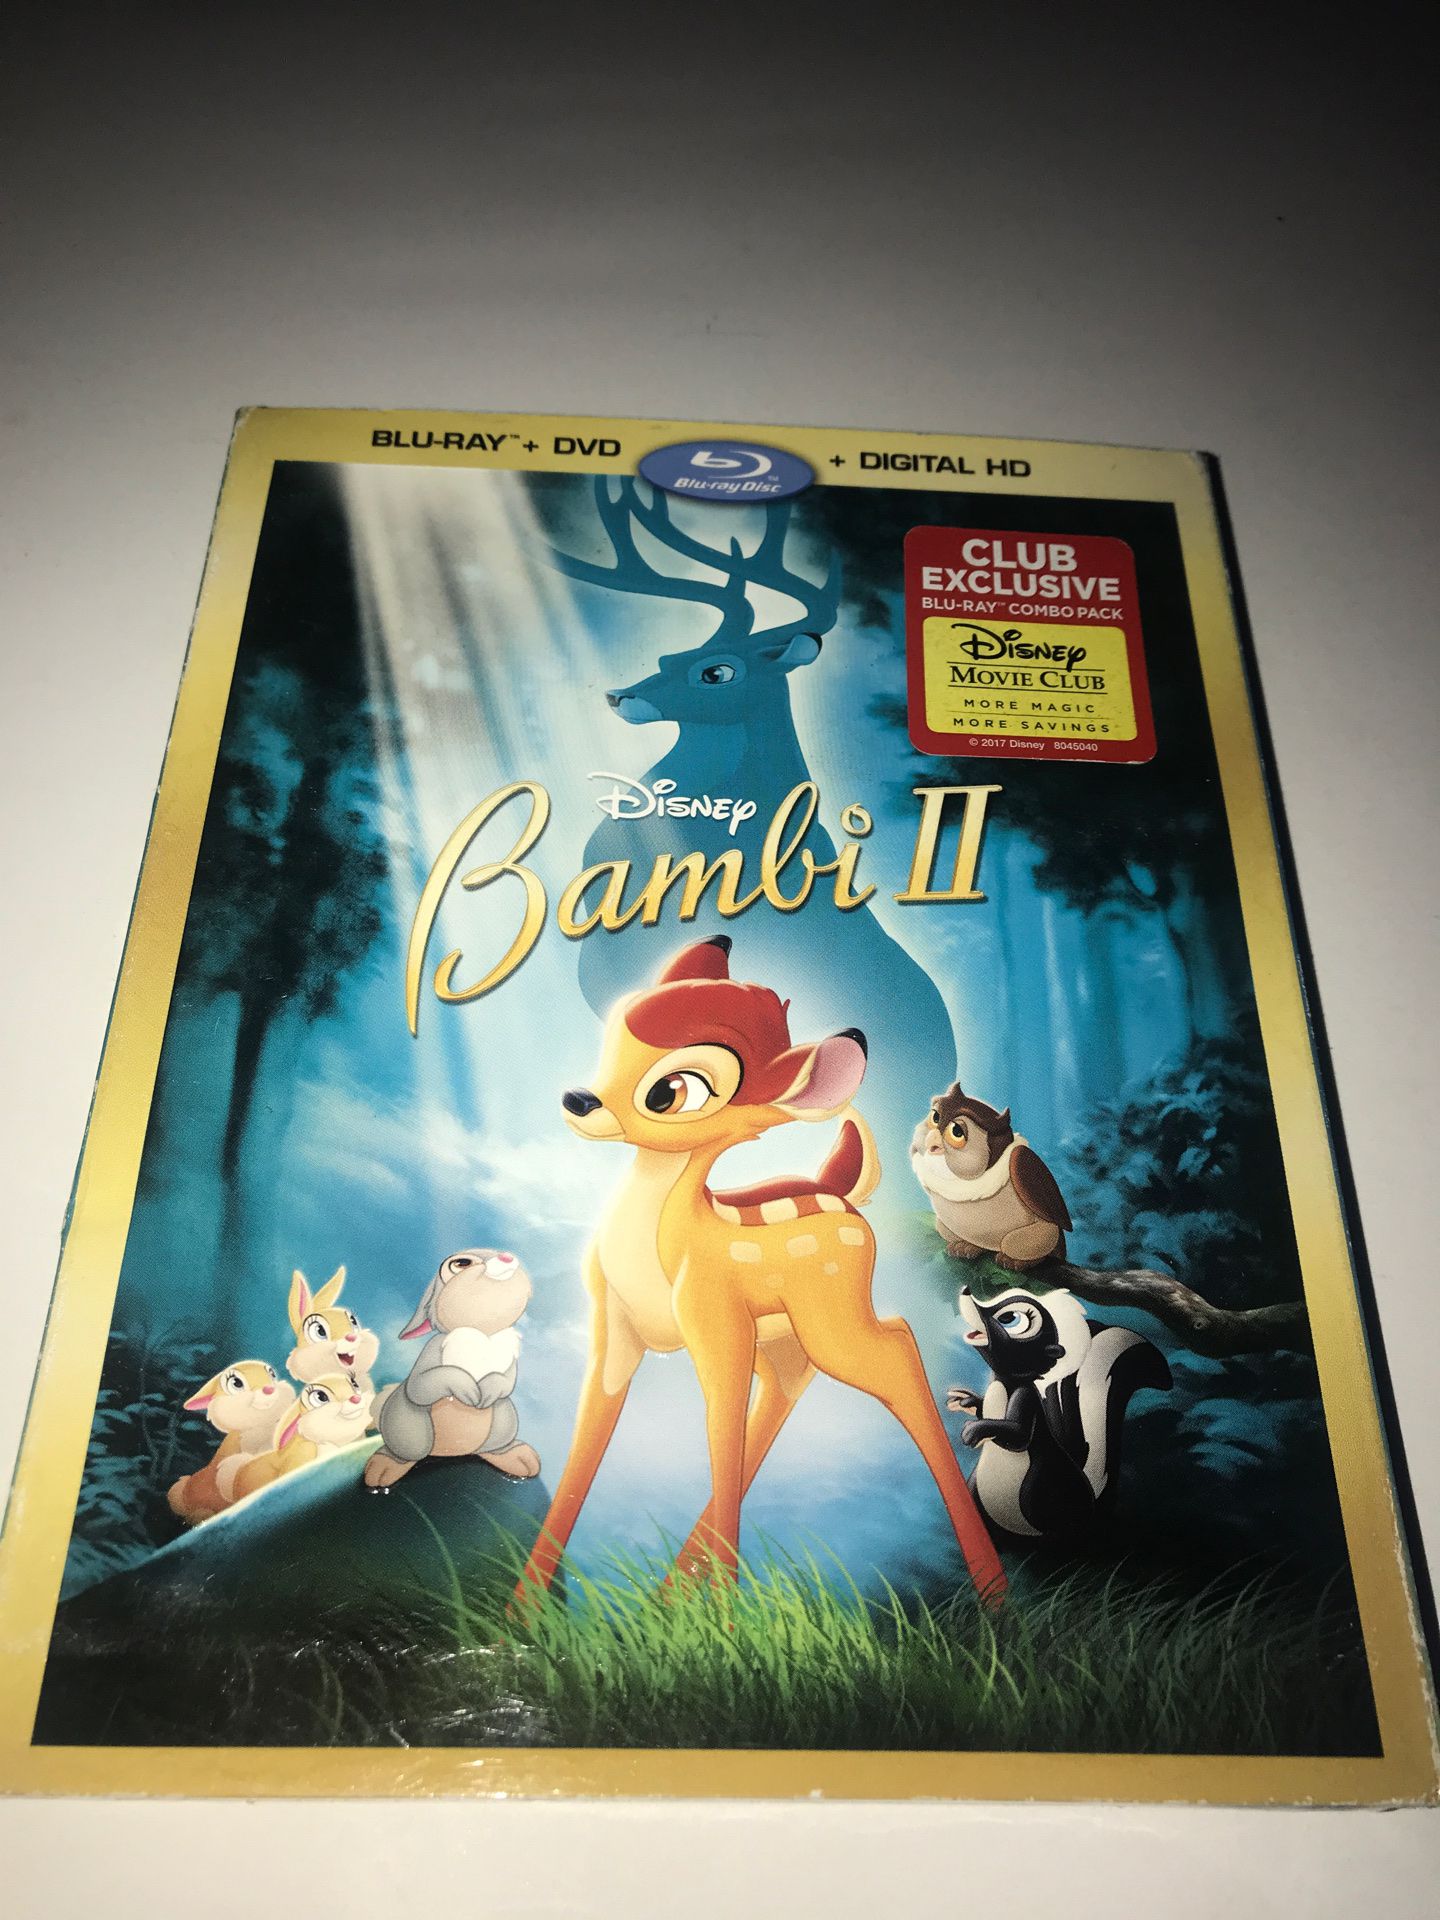 Disney’s Bambi 2 Blu-ray DVD Digital Copy brand new